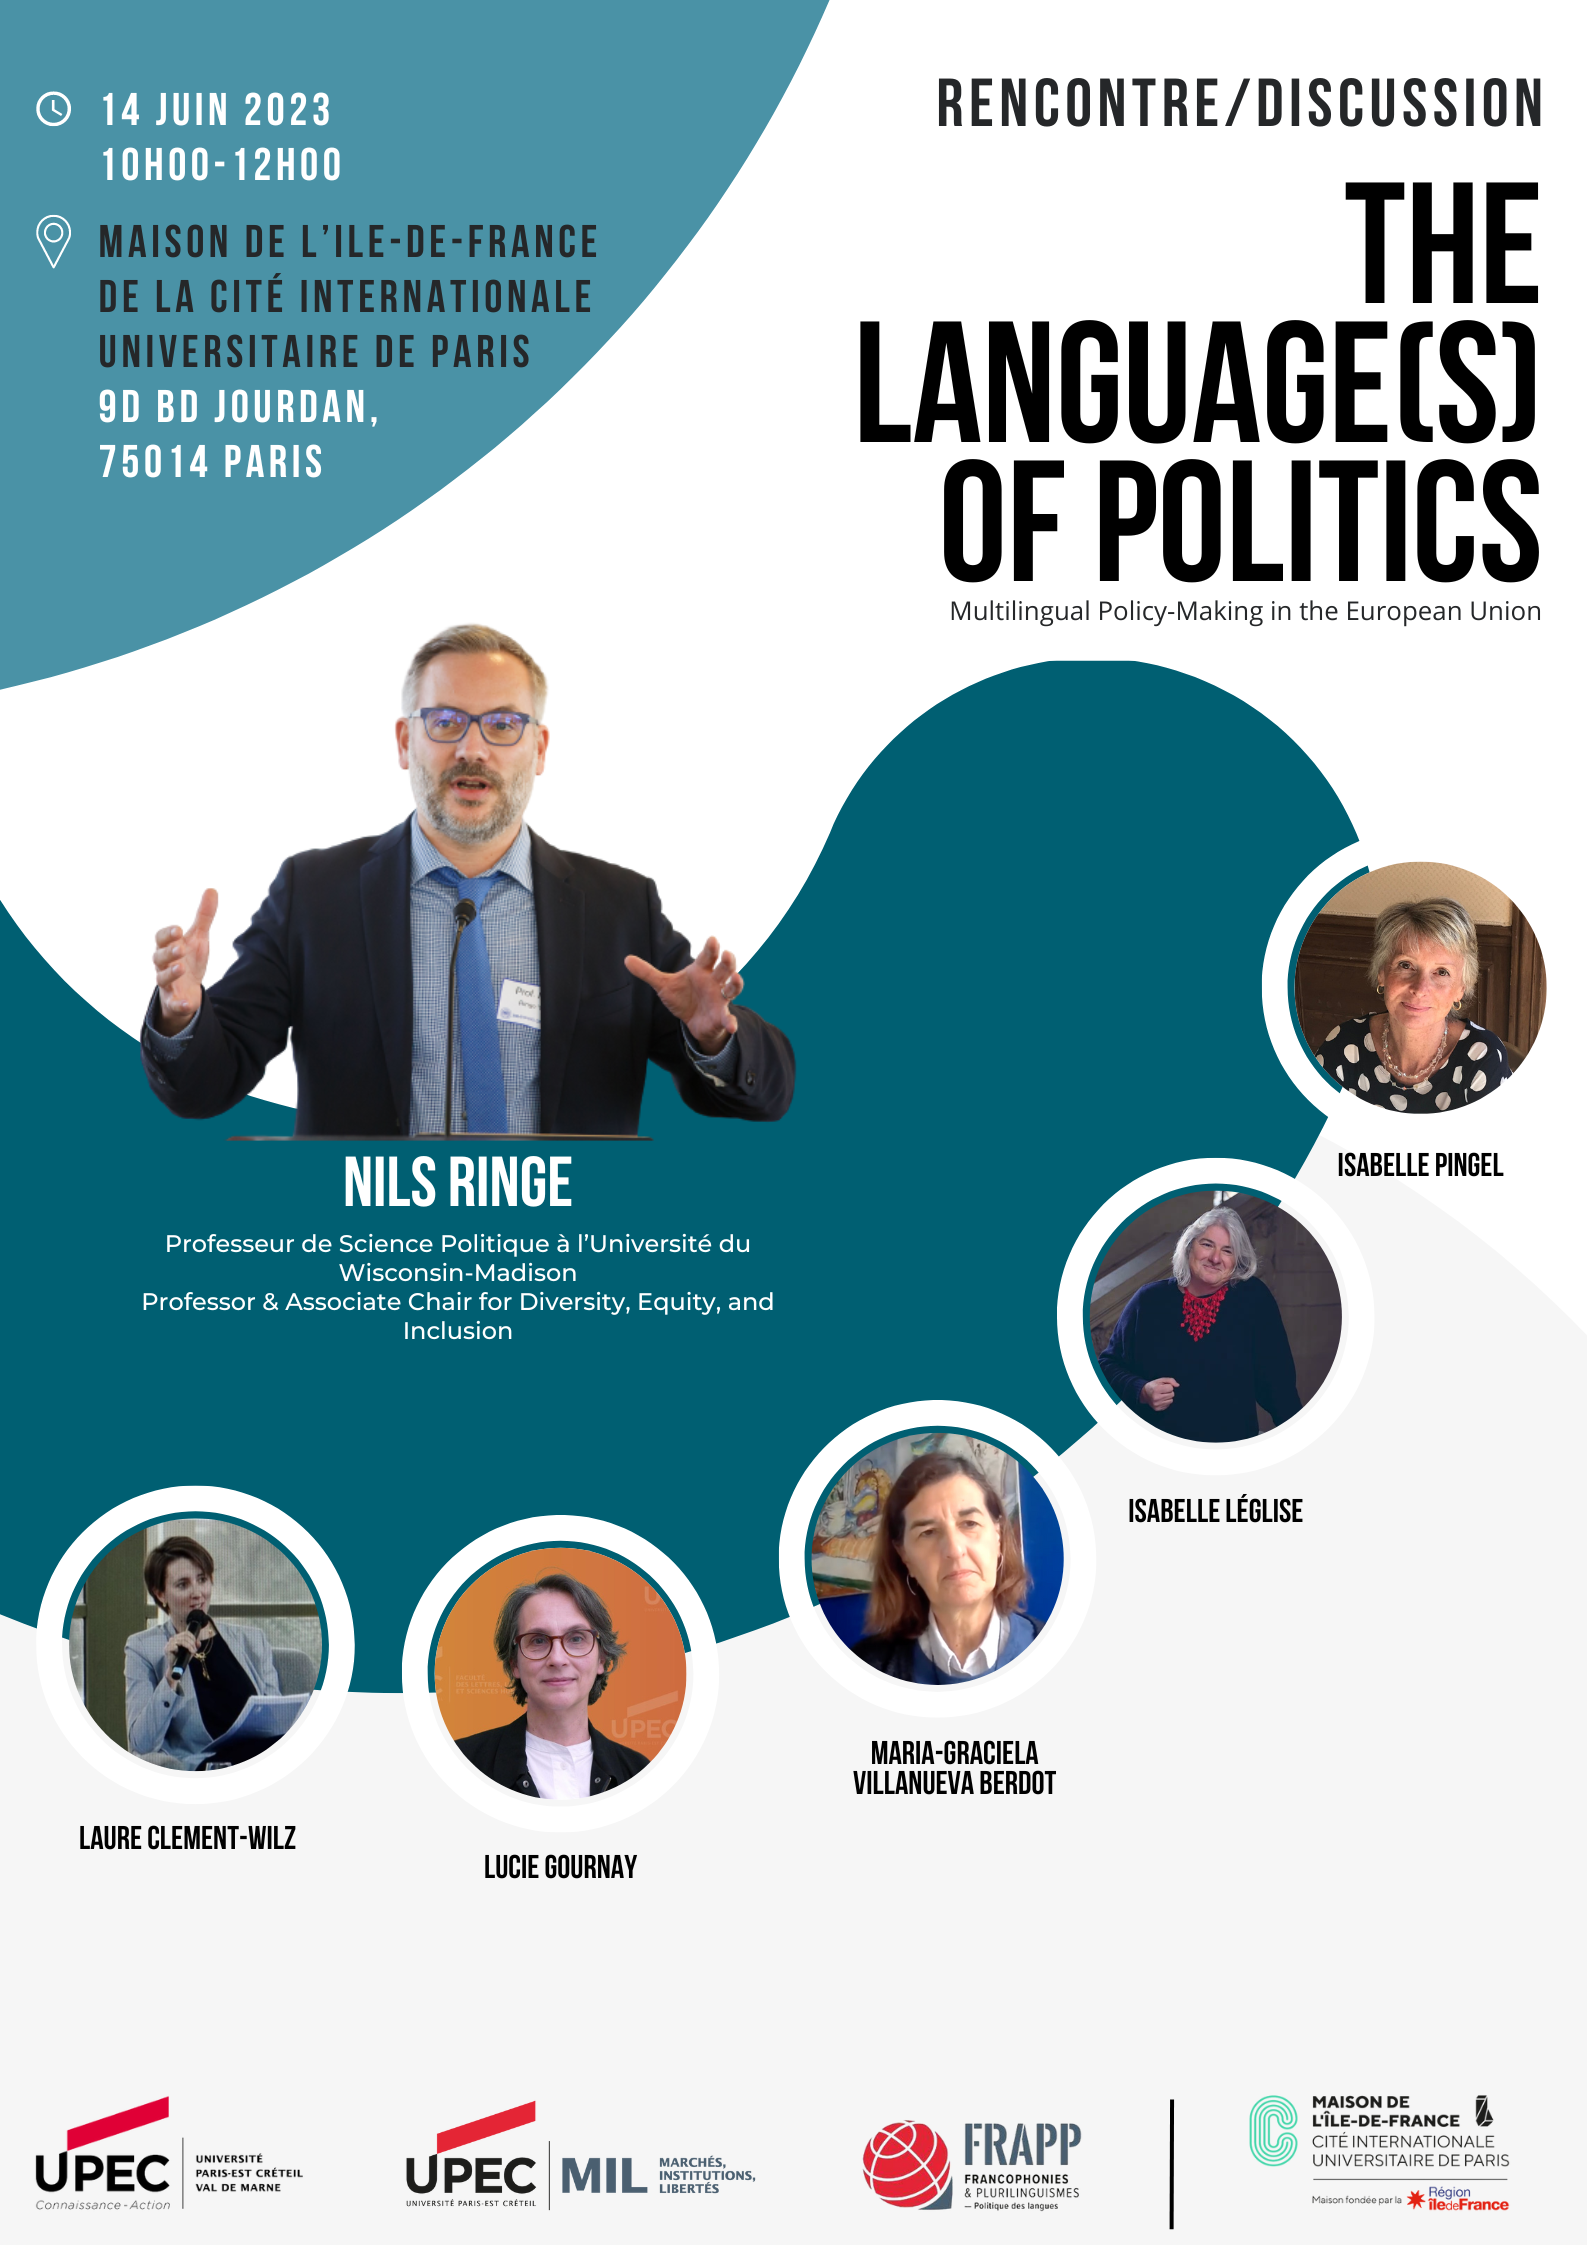 Tha languages of politics